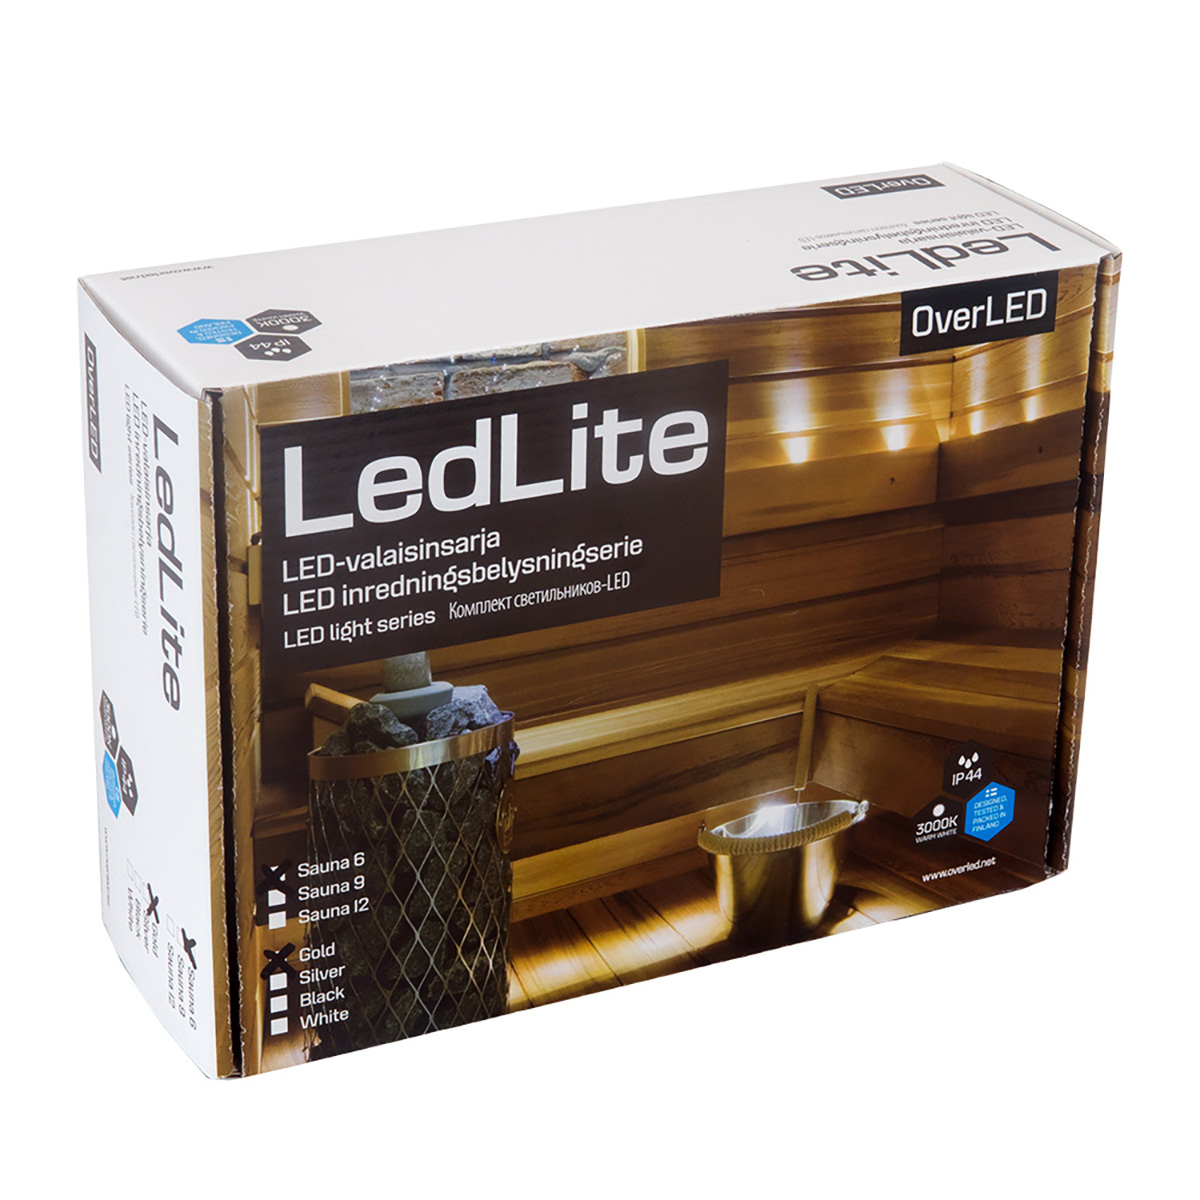 BASTUBELYSNING LEDLITE, 6-12st, Guld, LED LITE 6 